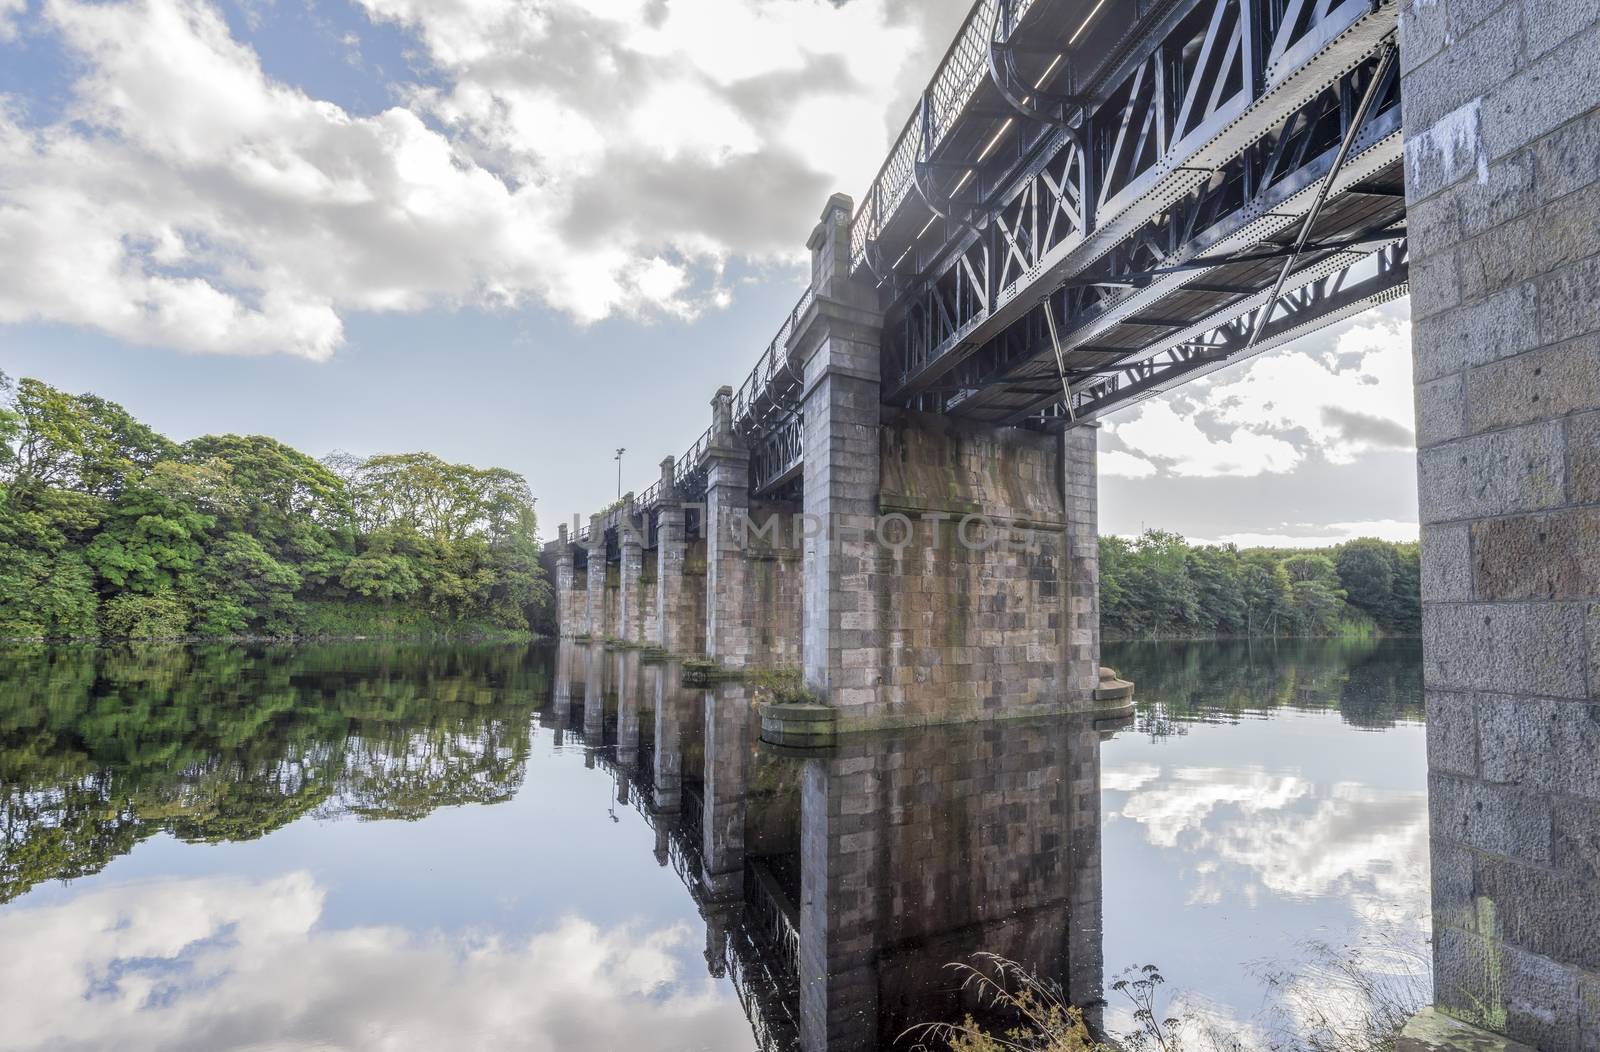 A view of scenic railway bridge across river Dee in Aberdeen, Scotland by anastasstyles